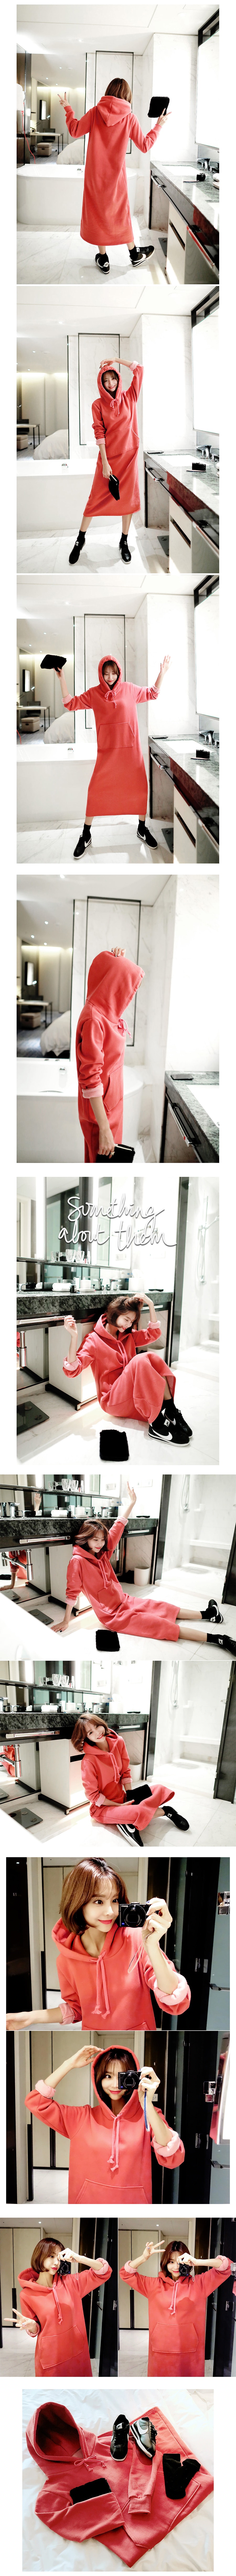 KOREA Hoodie Sweatshirt Long Dress(Fleece Lining) Scarlet One Size(Free) [Free Shipping]